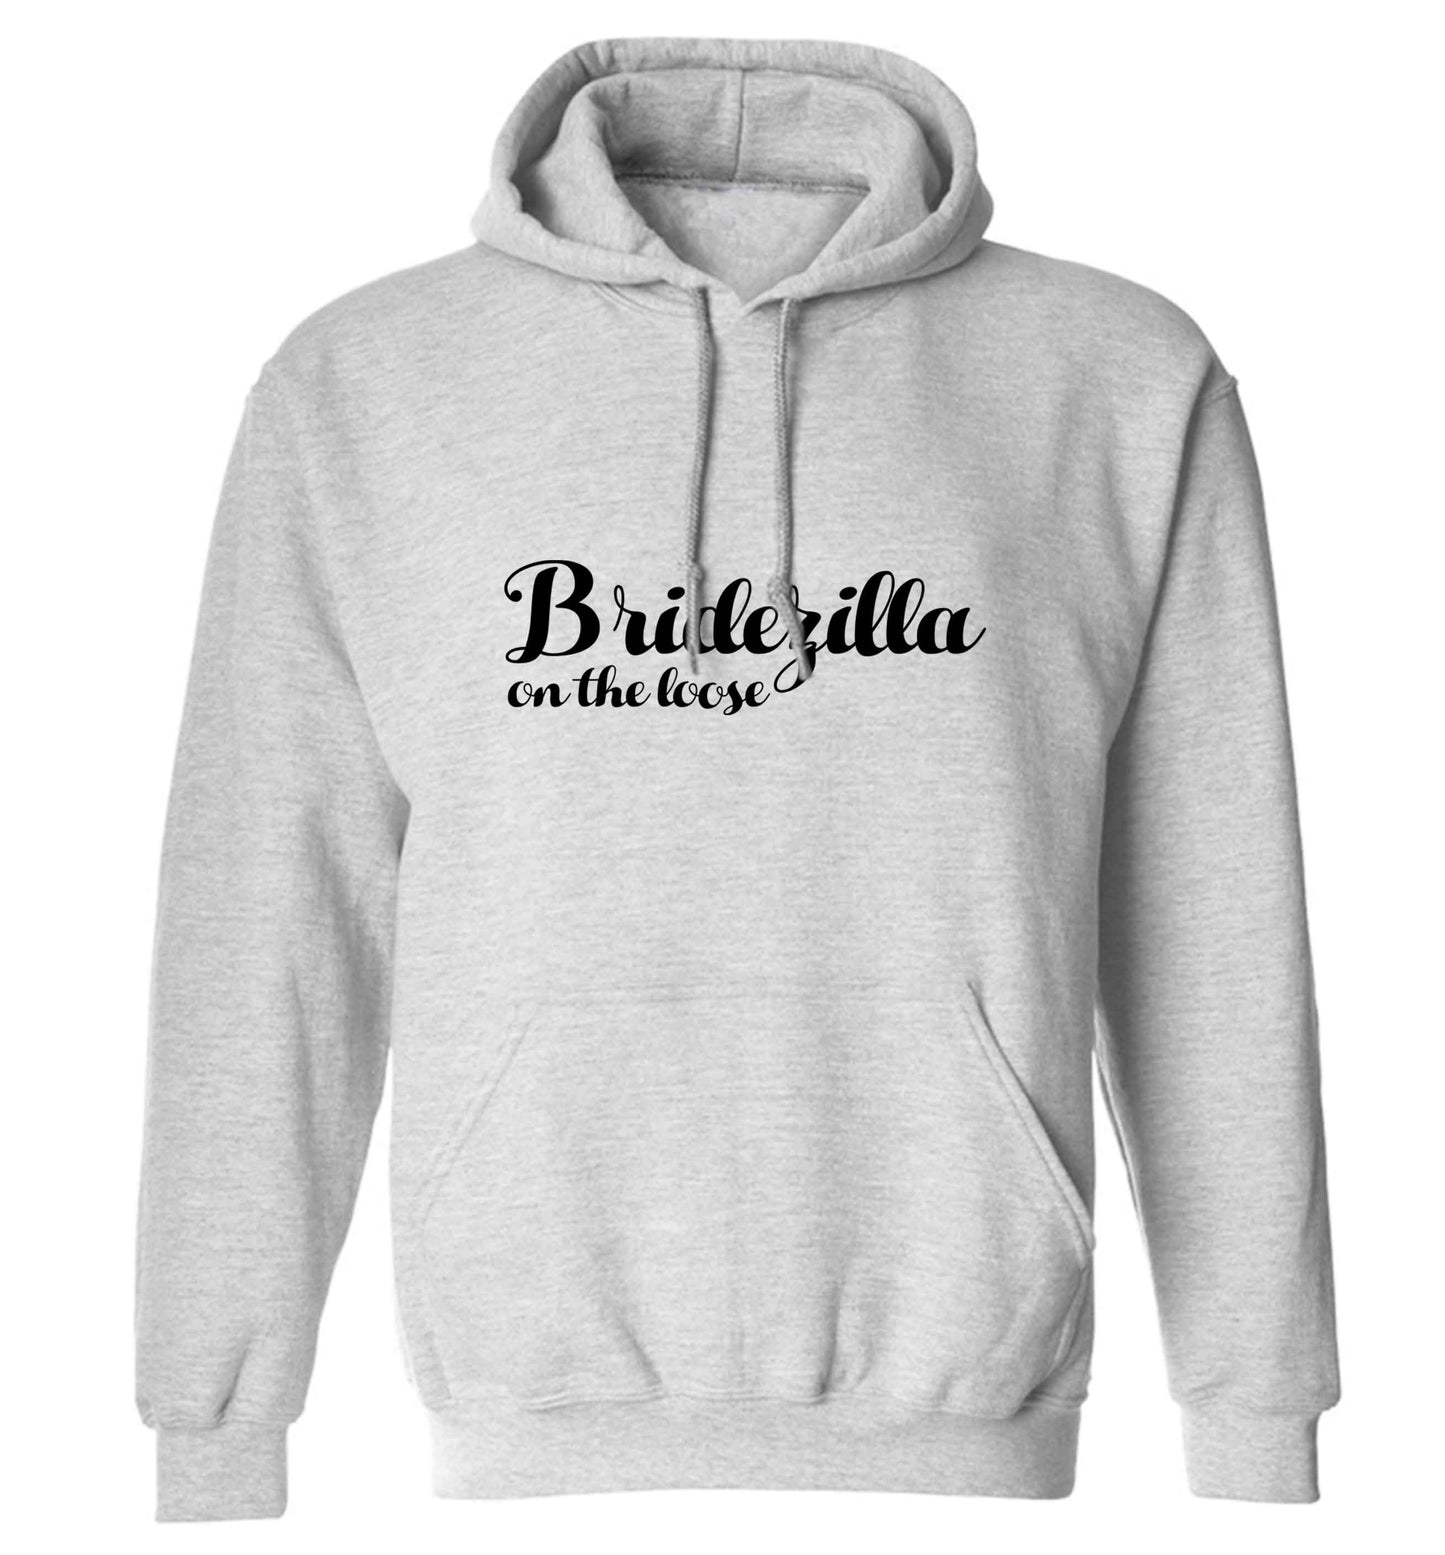 Bridezilla on the loose adults unisex grey hoodie 2XL